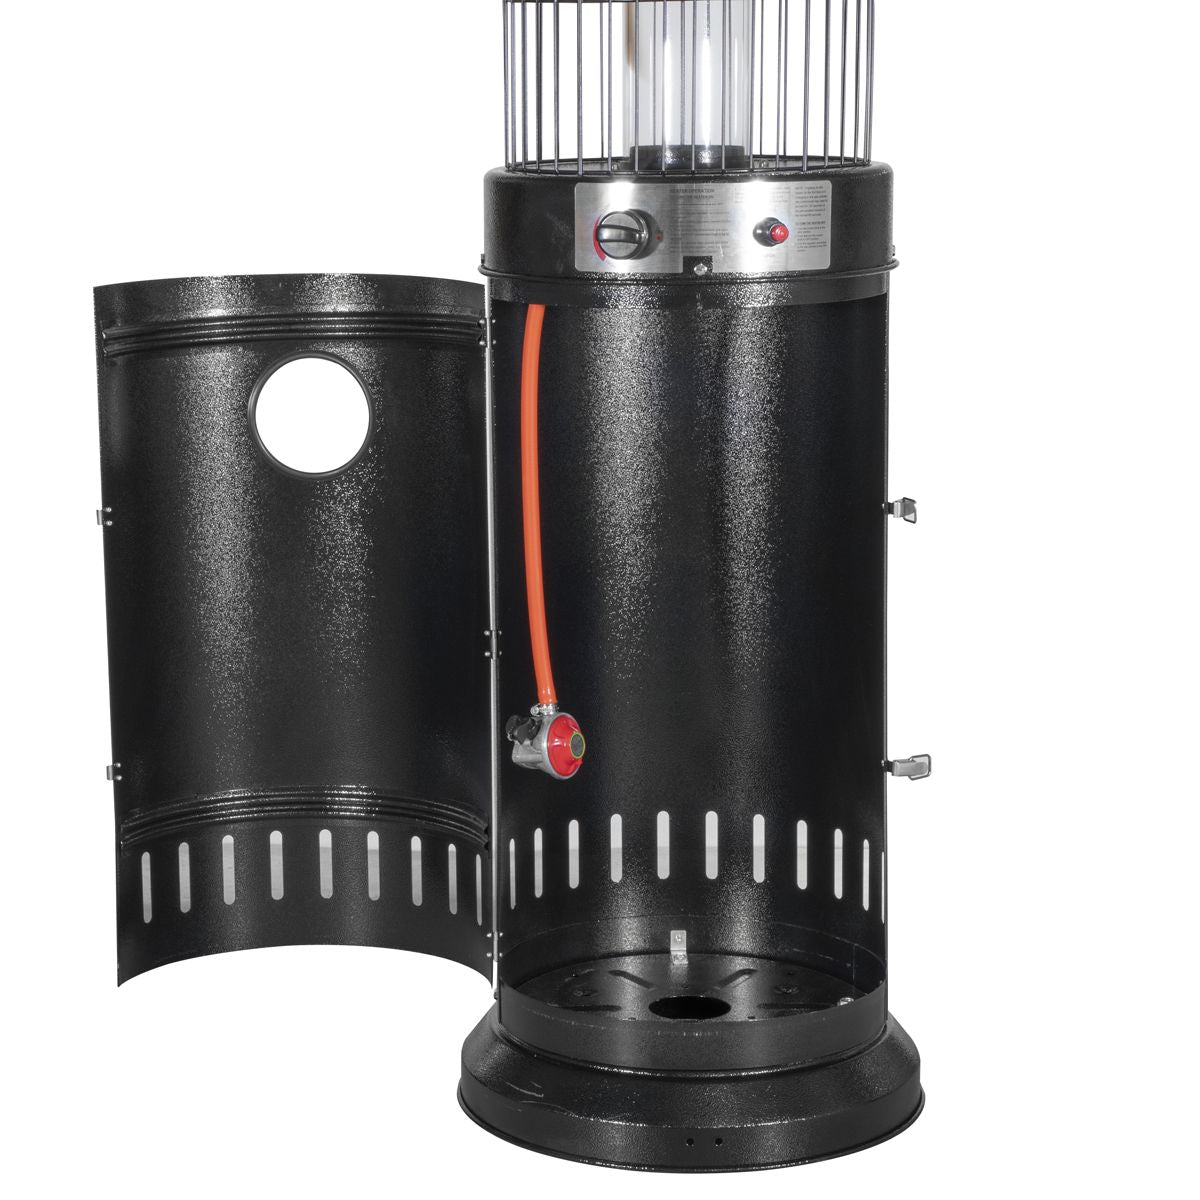 Dellonda DG124 13kW Black Gas Patio Heater for Commercial & Domestic Use